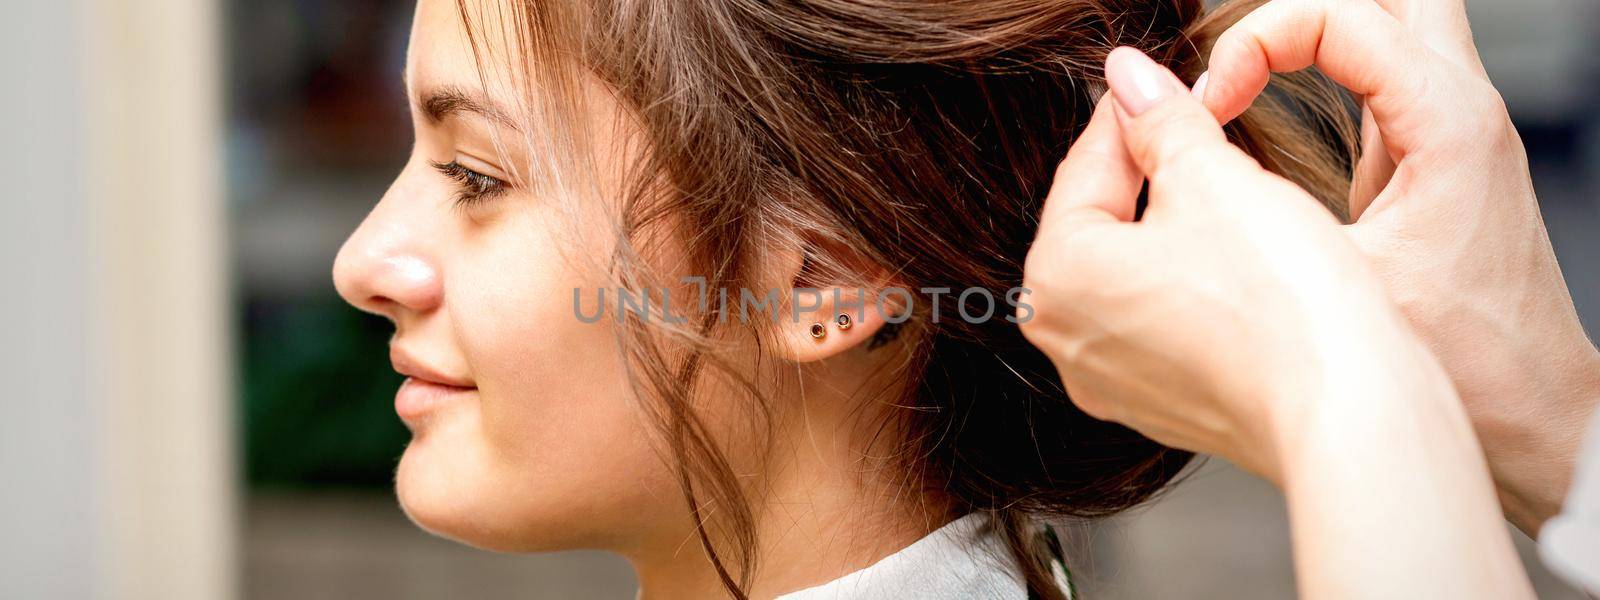 Hairstylist styling hair of woman by okskukuruza